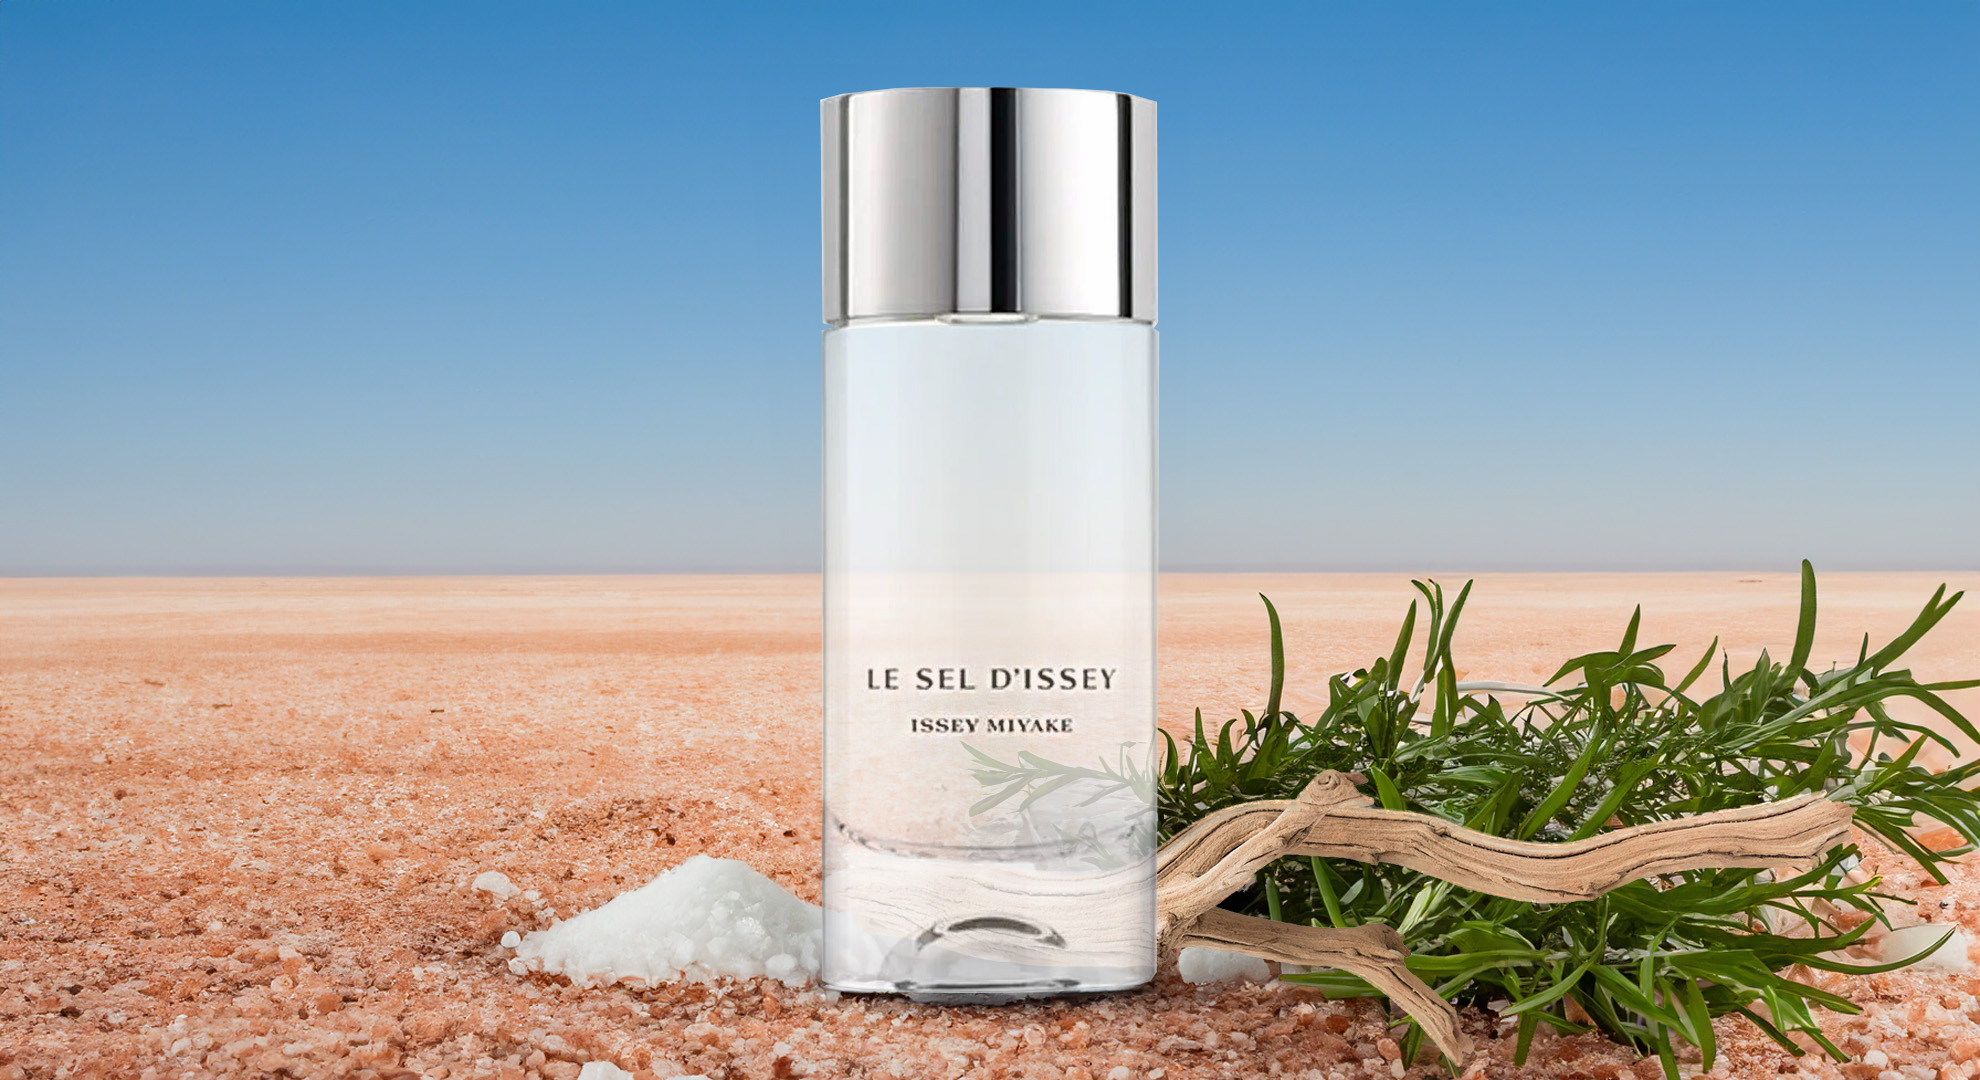 Le Sel d’Issey: A Salt-Sprayed Voyage in a Bottle